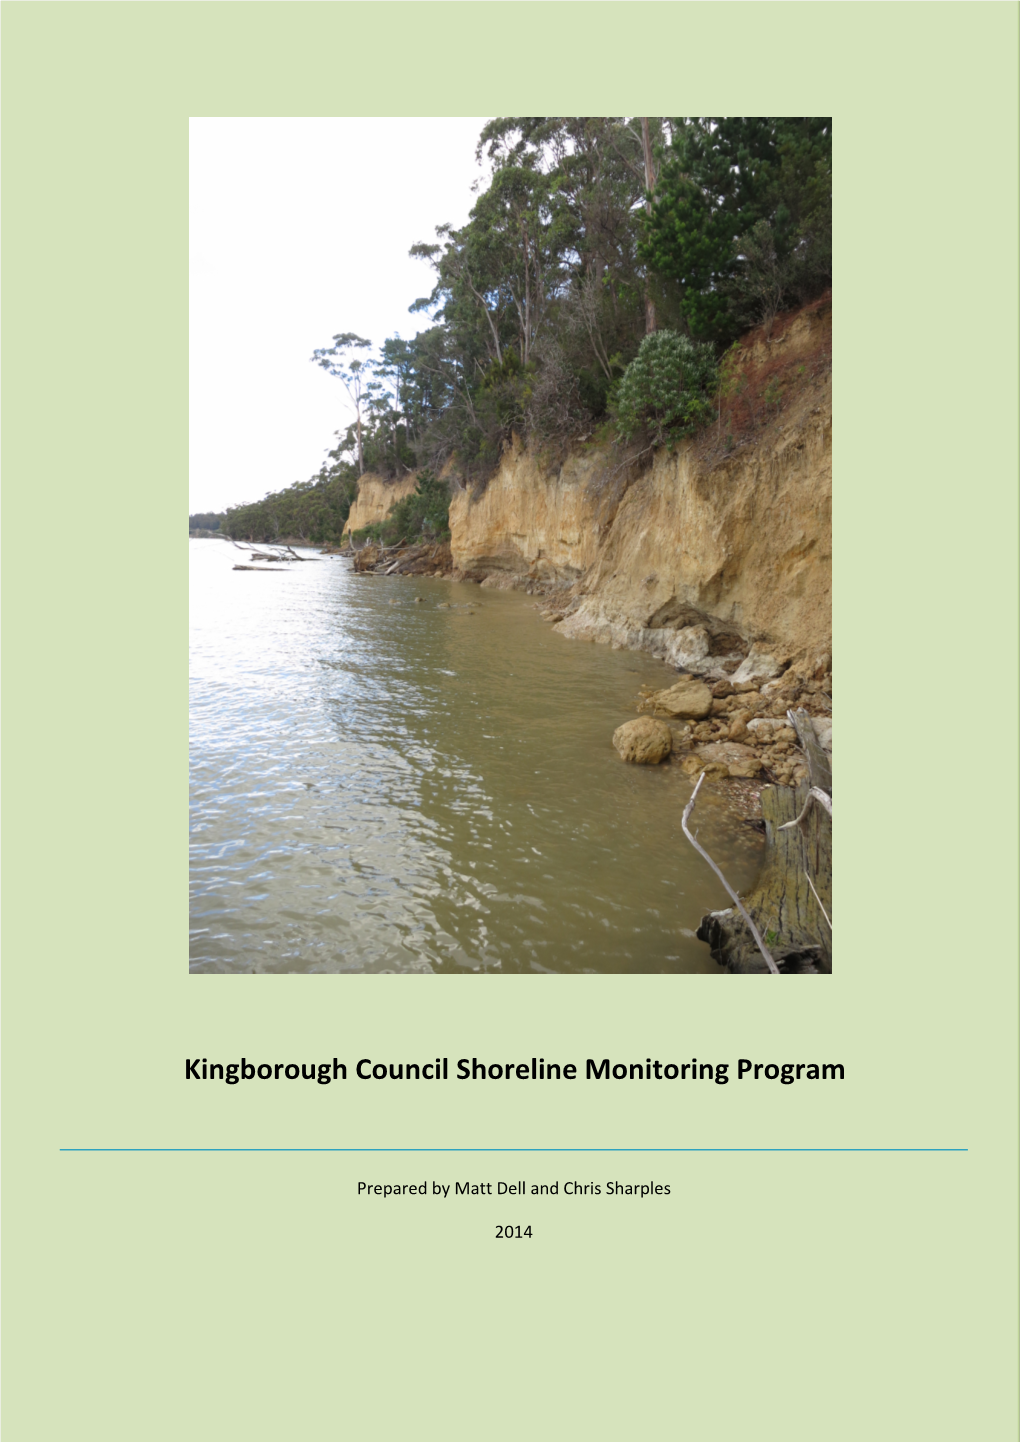 Kingborough Council Shoreline Monitoring Program